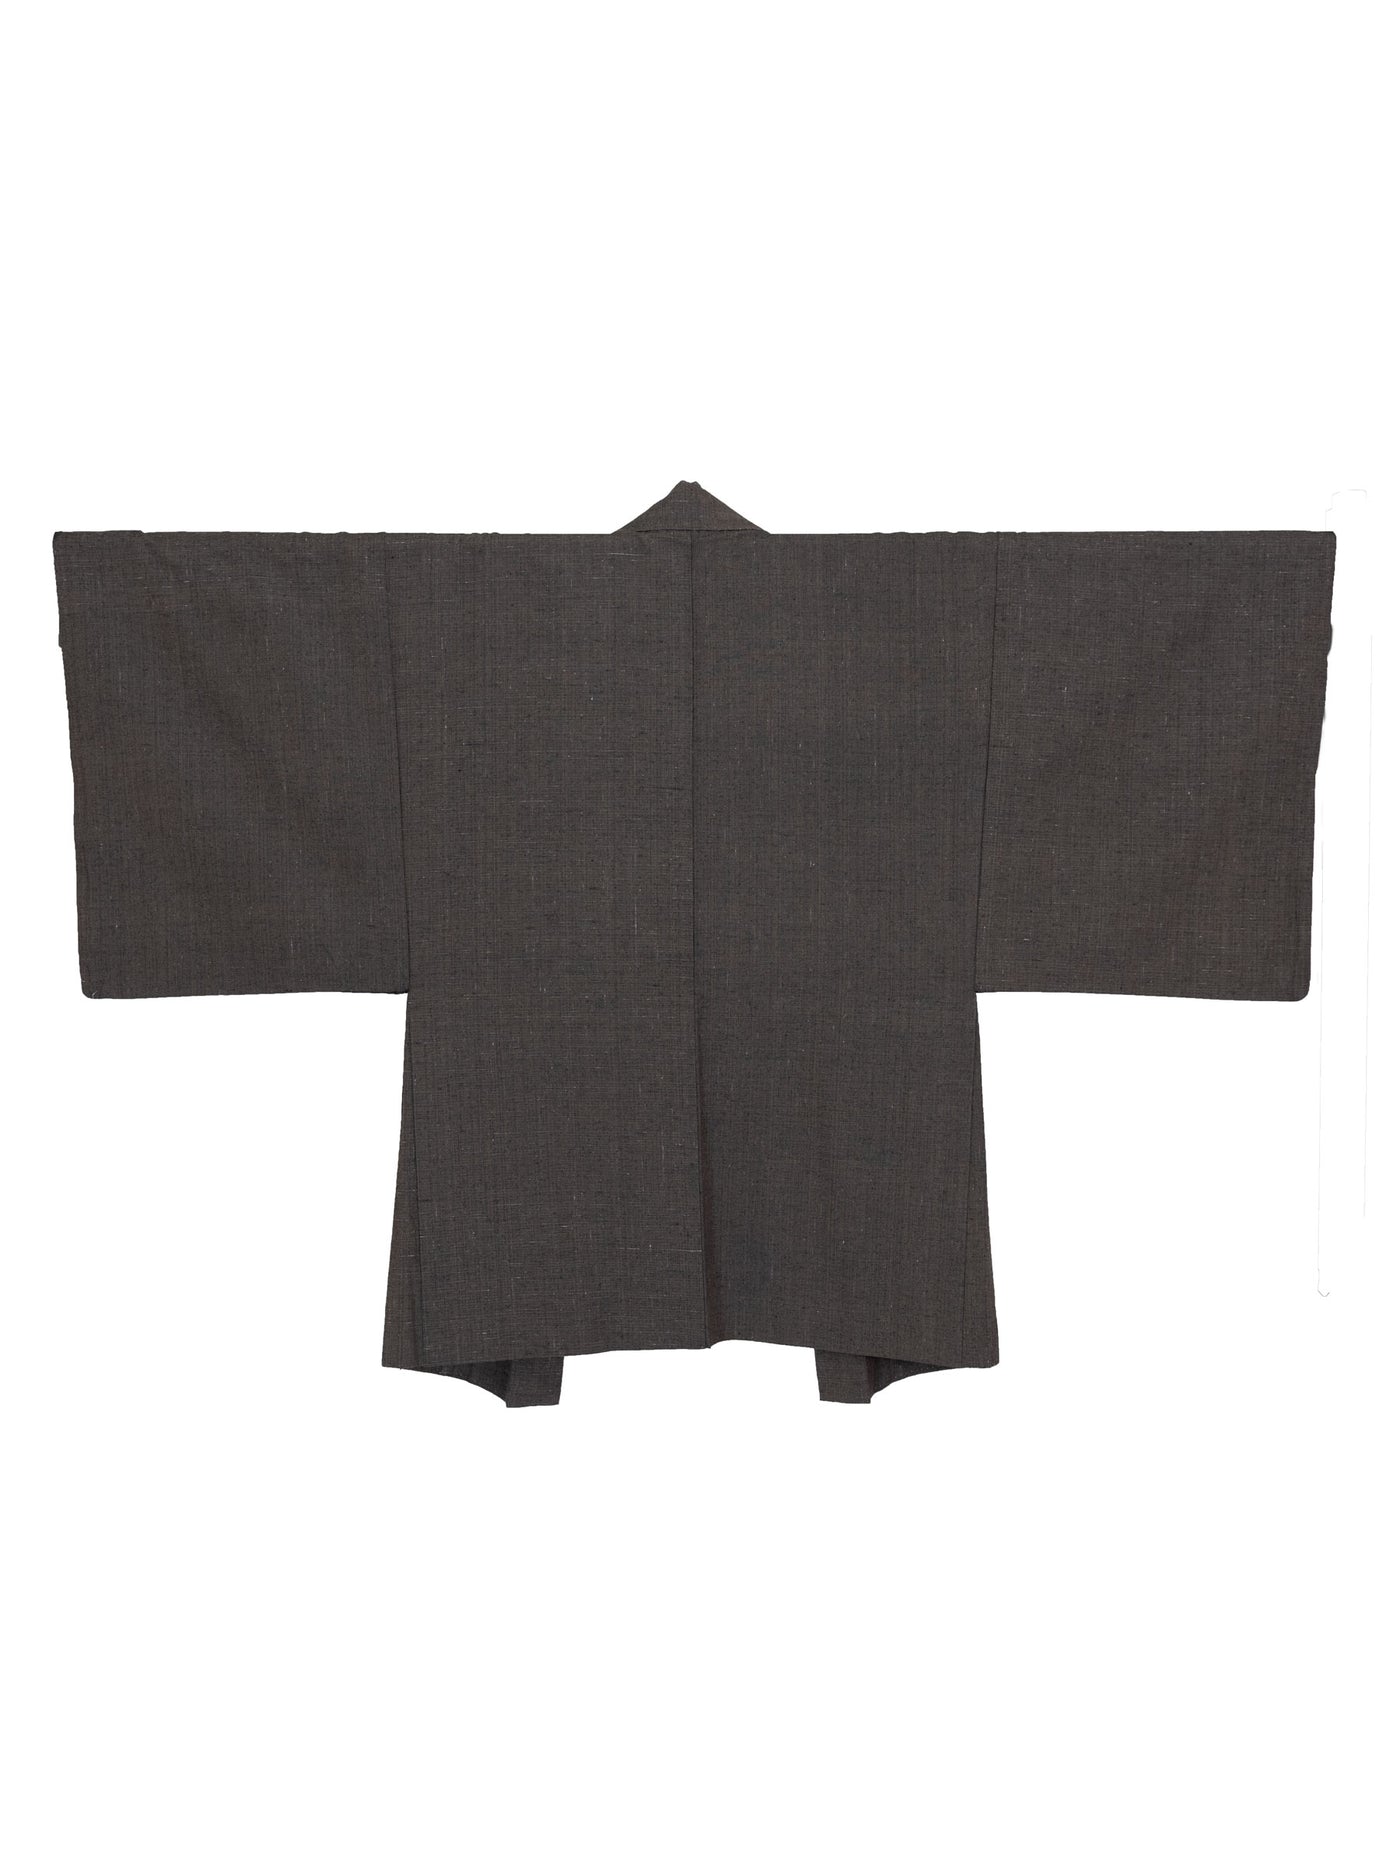 Vintage Takaramono Men's Haori Jacket